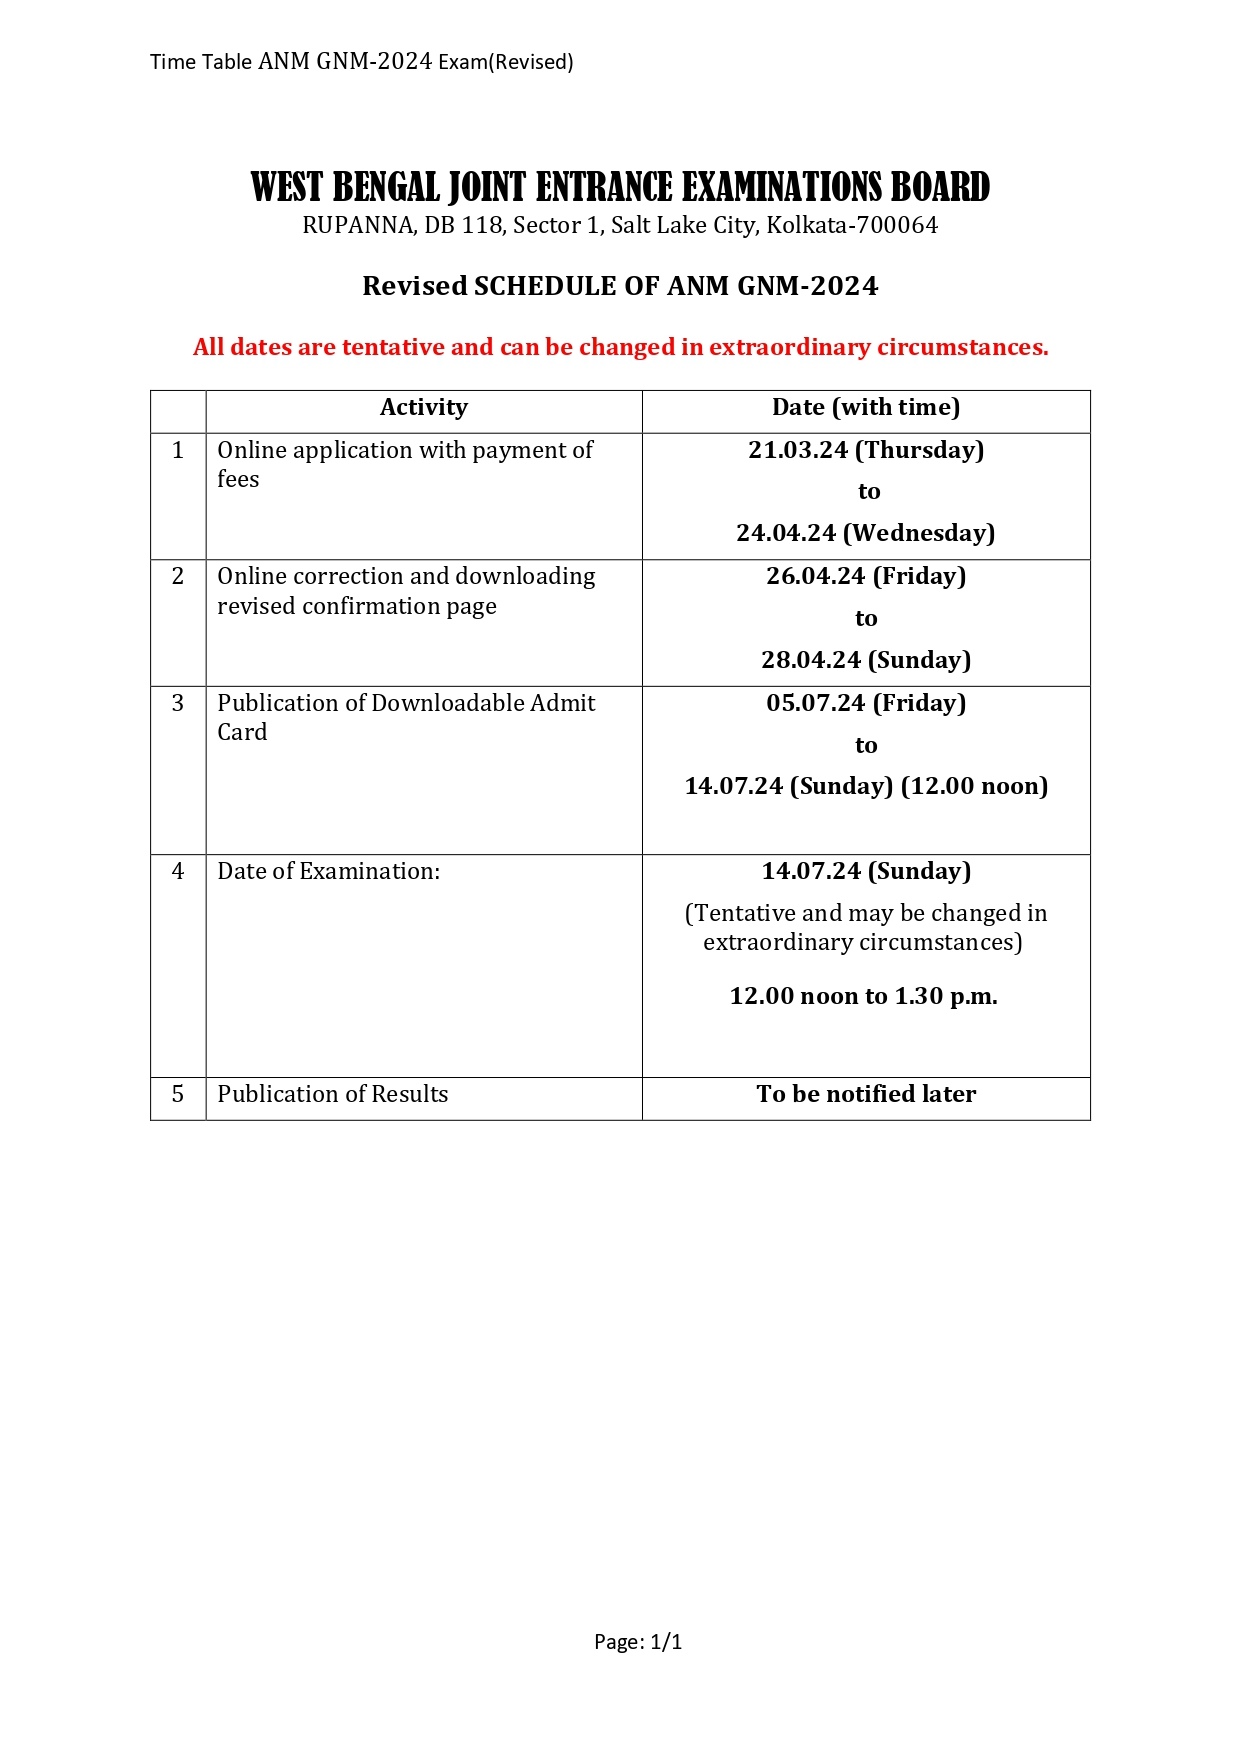 WBJEEB ANM-GNM Revise Time Table 2024